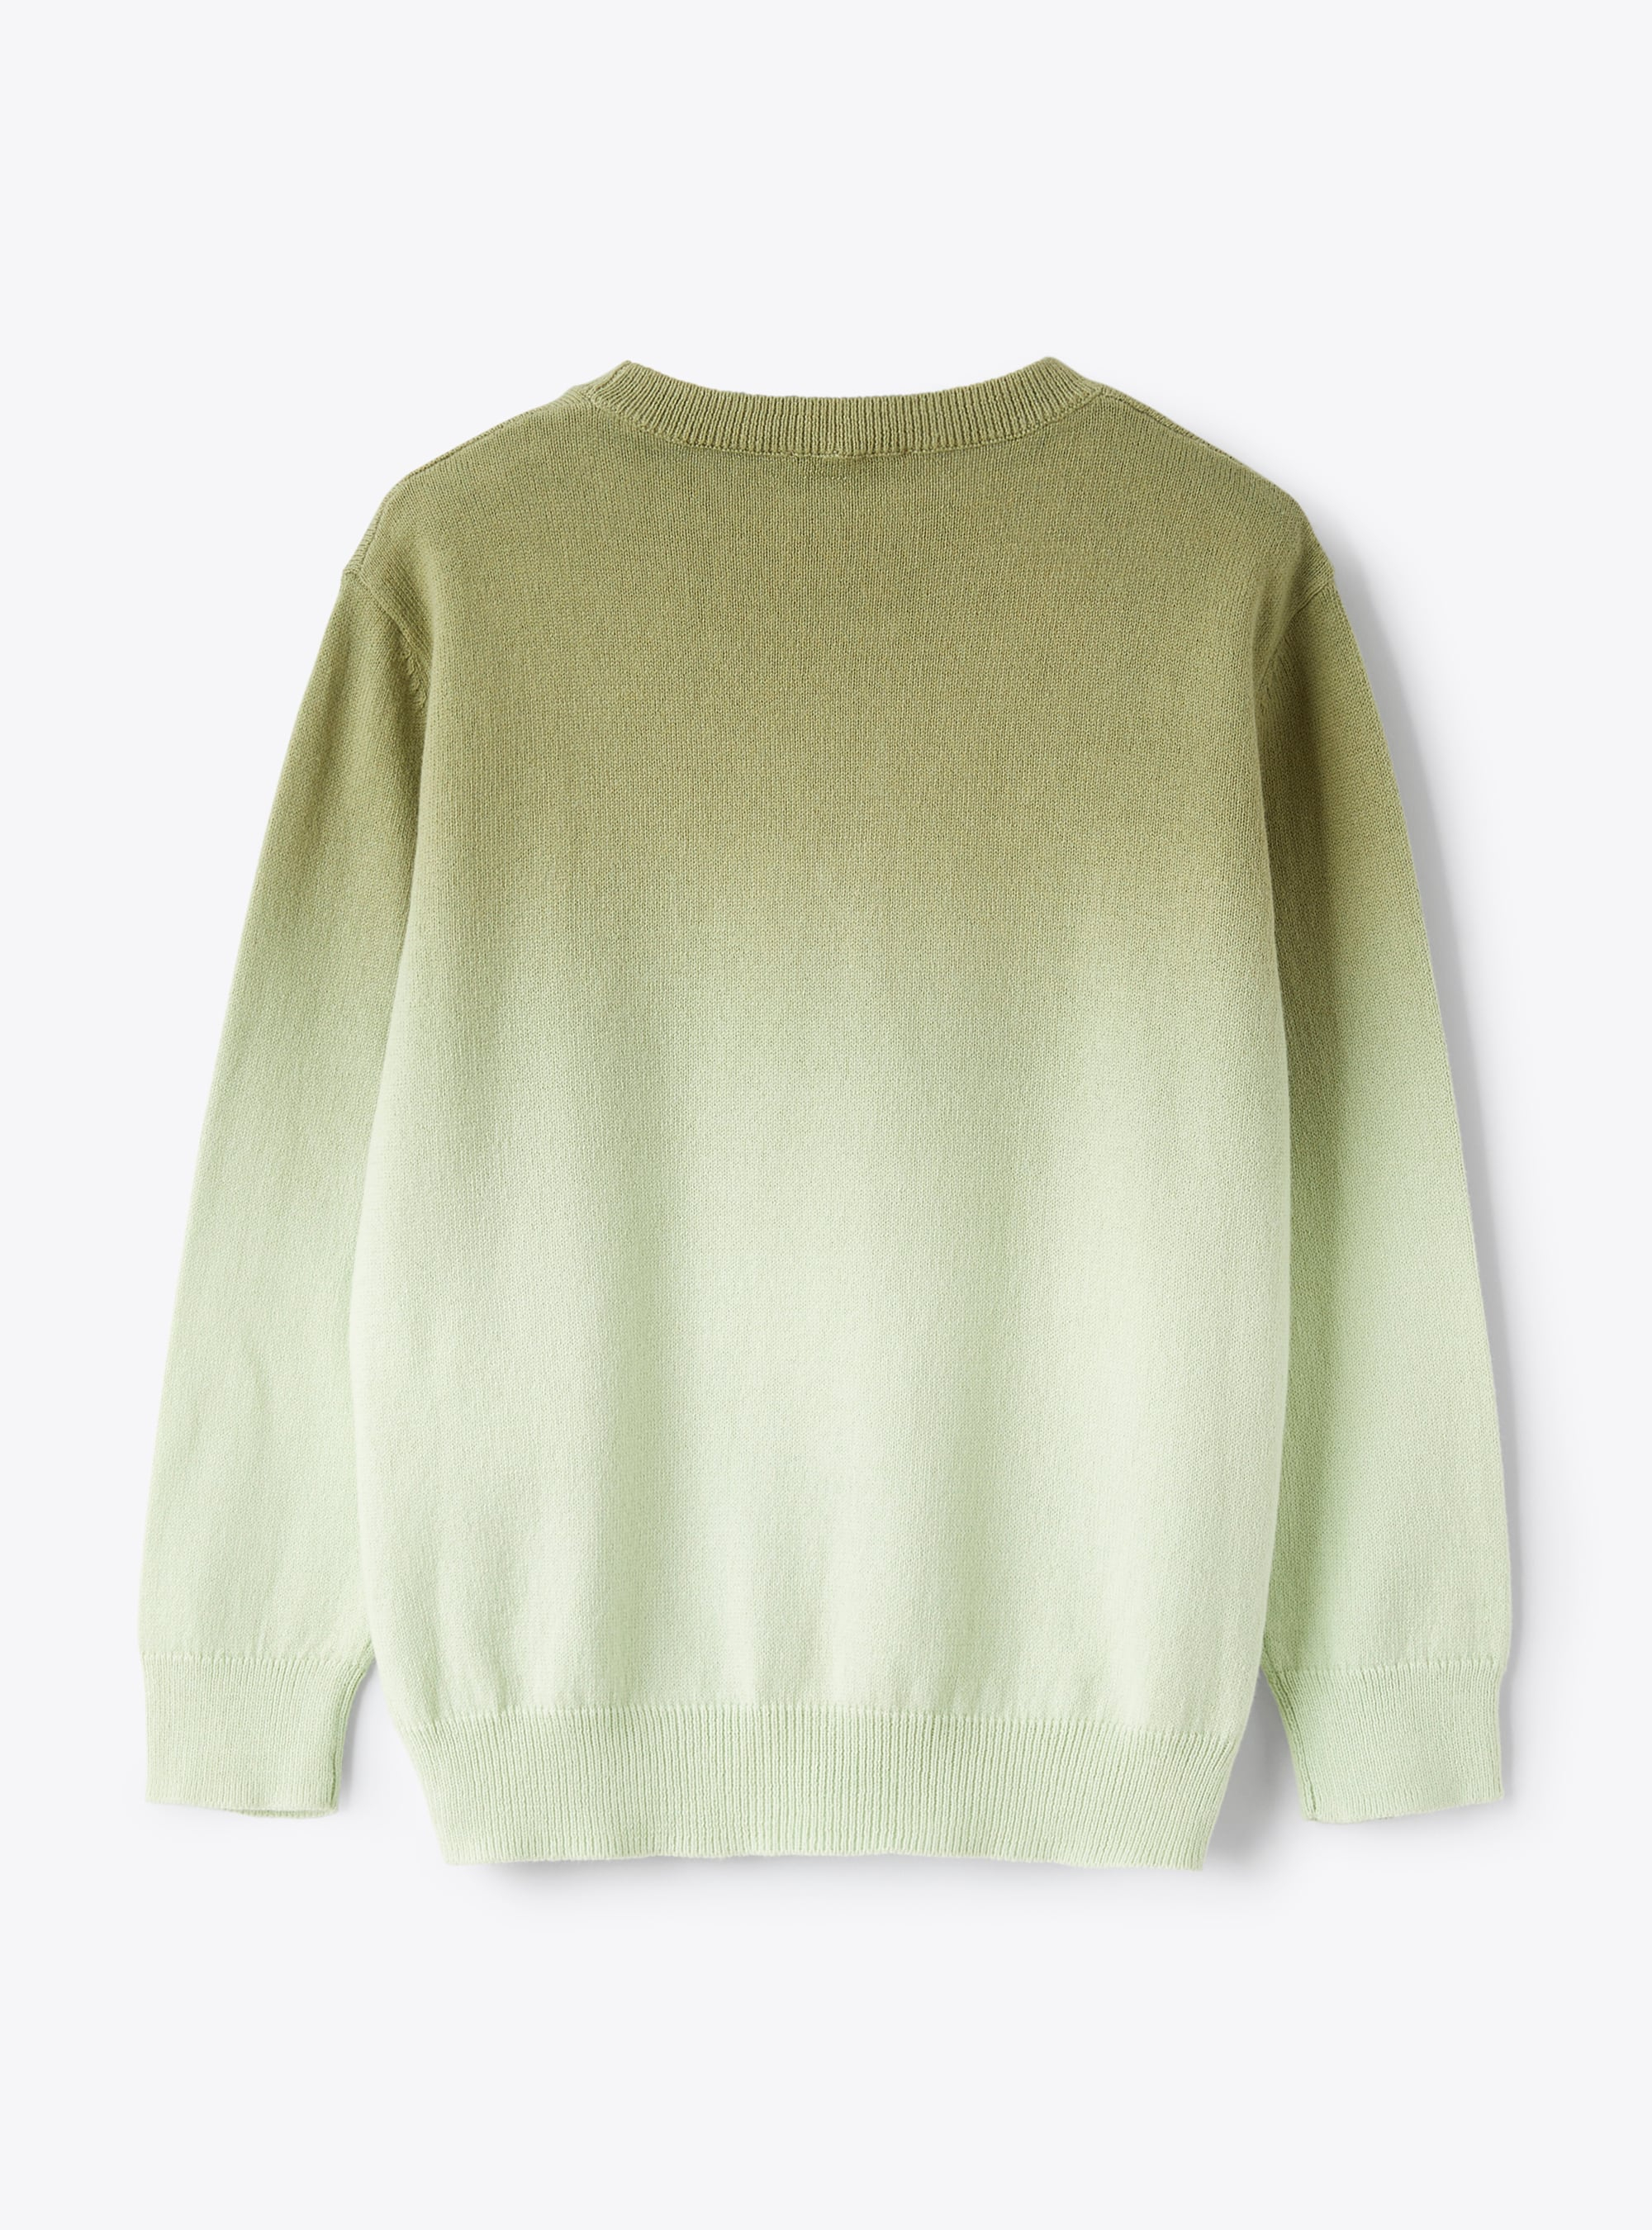 Sweater in sage-green organic cotton - Green | Il Gufo